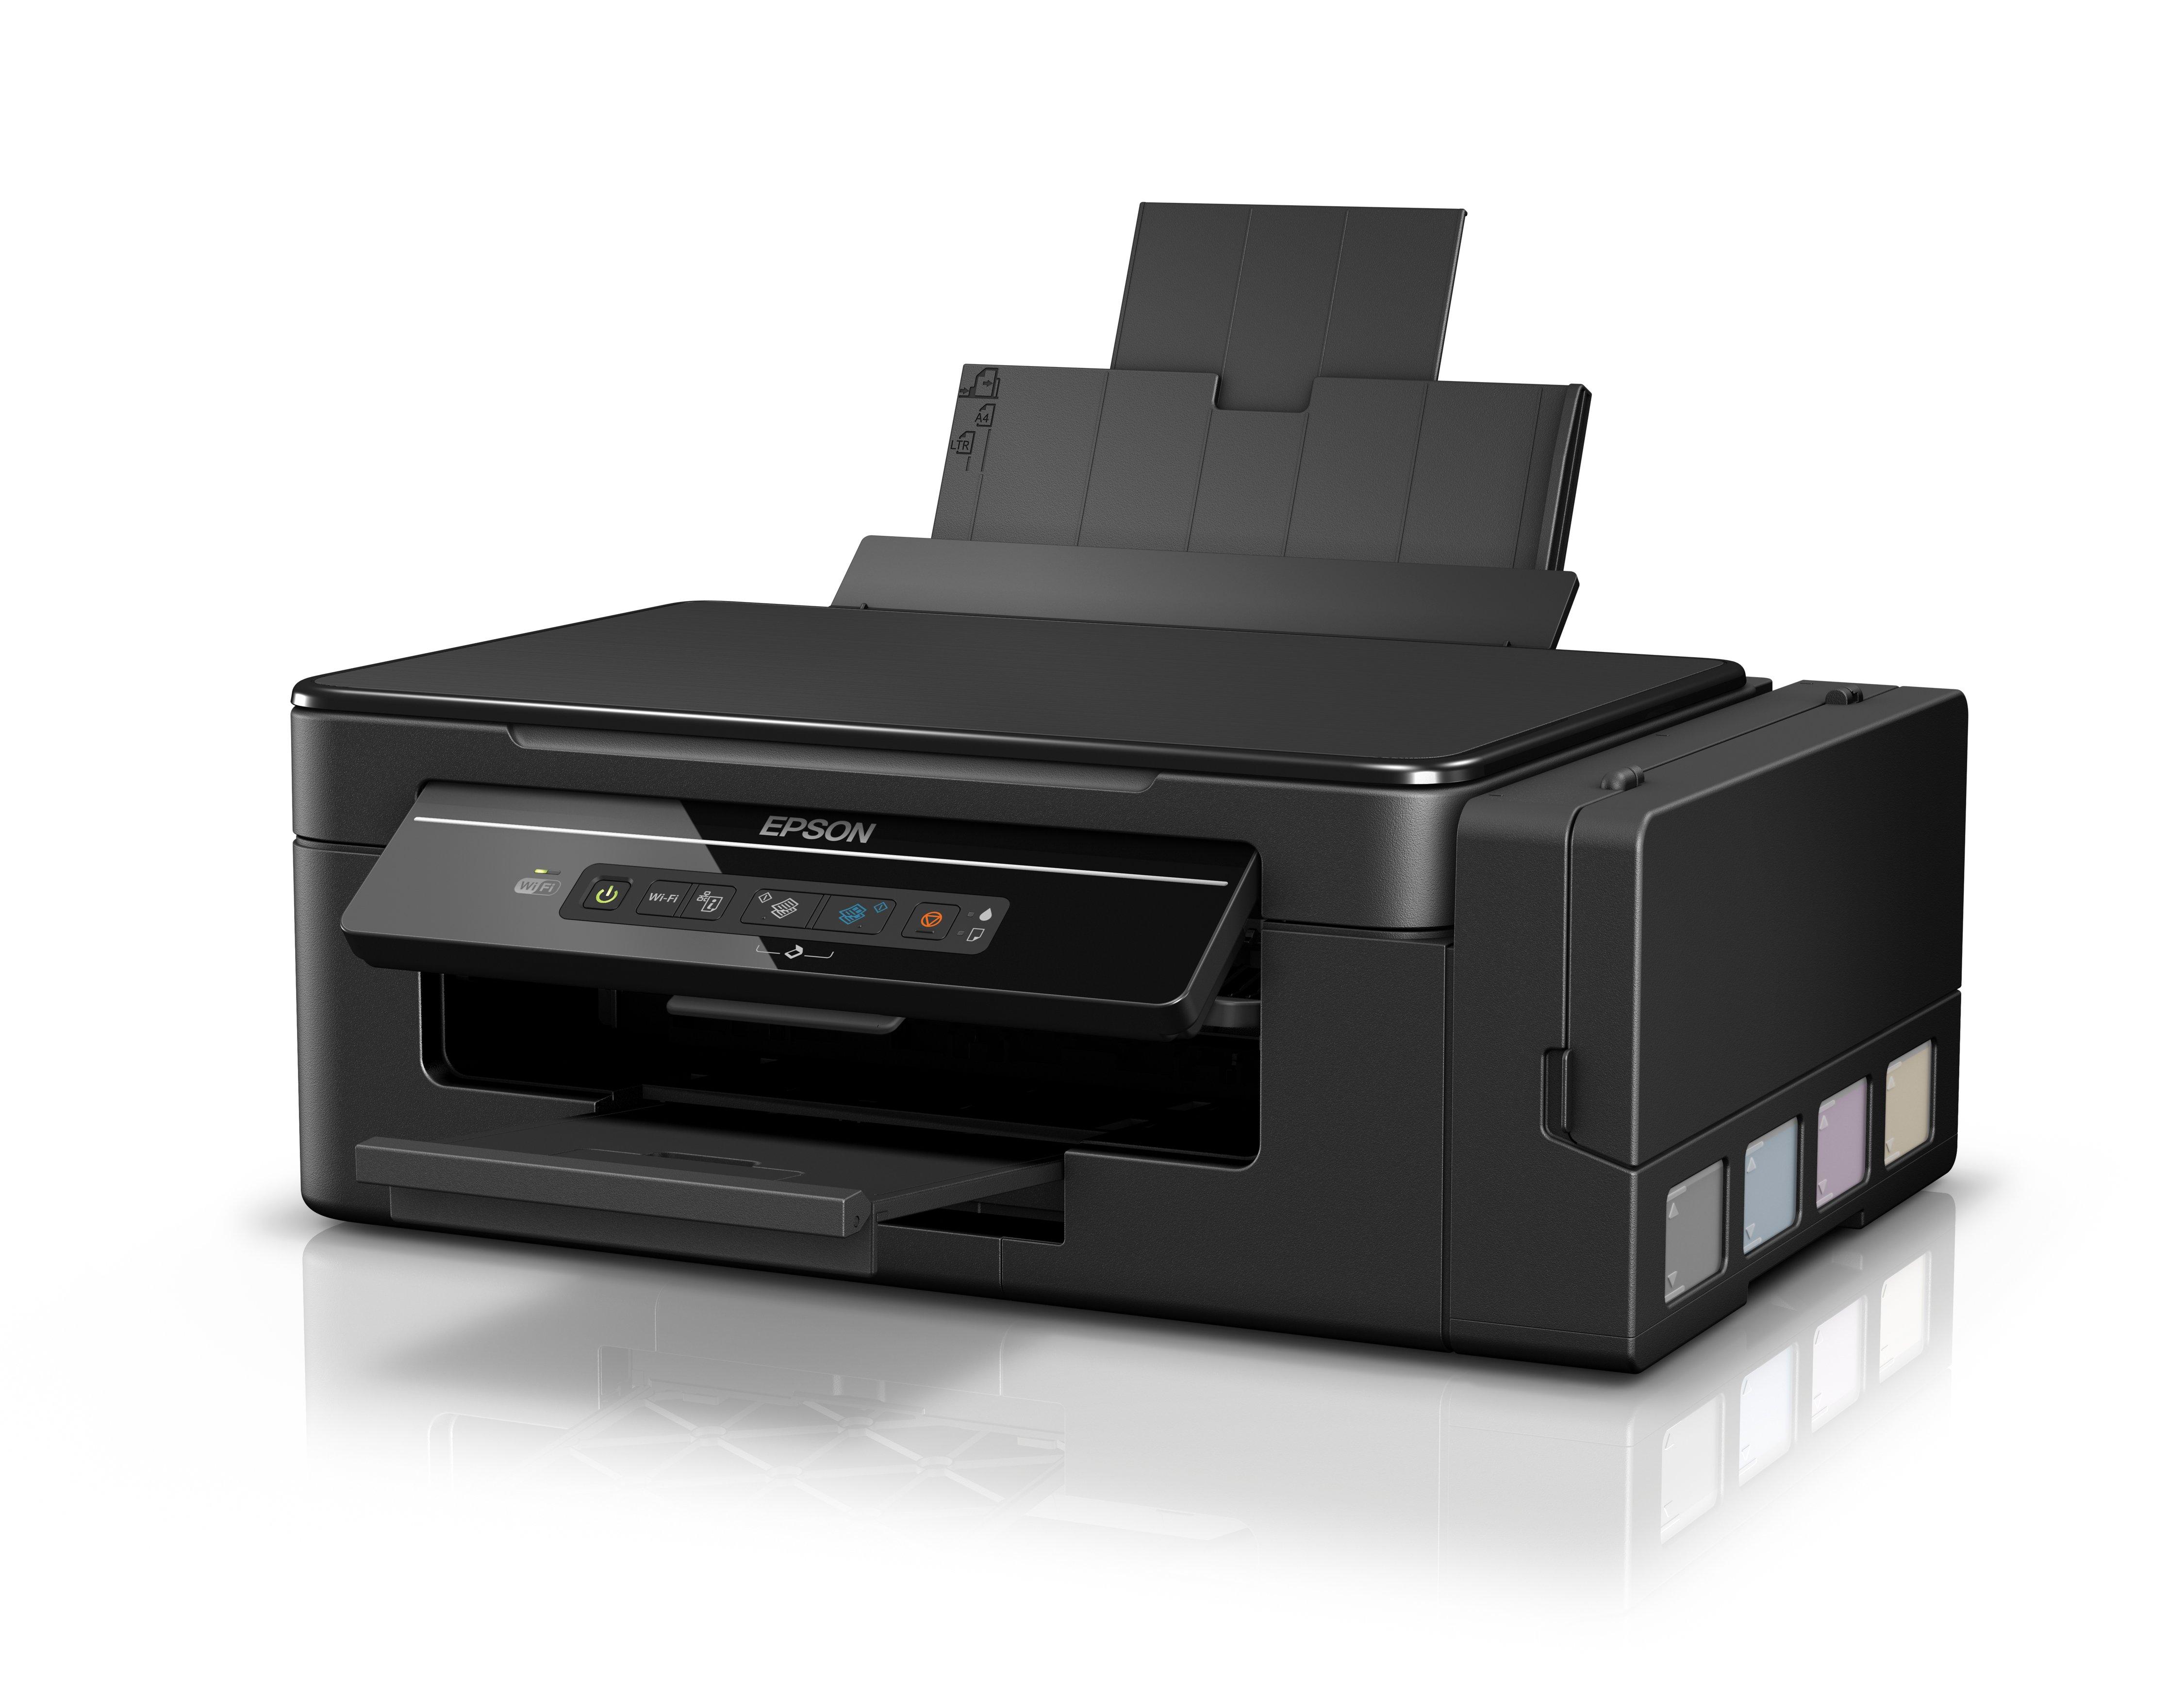 EcoTank L3050 Consumer | Inkjet Printers | Products | Epson Europe